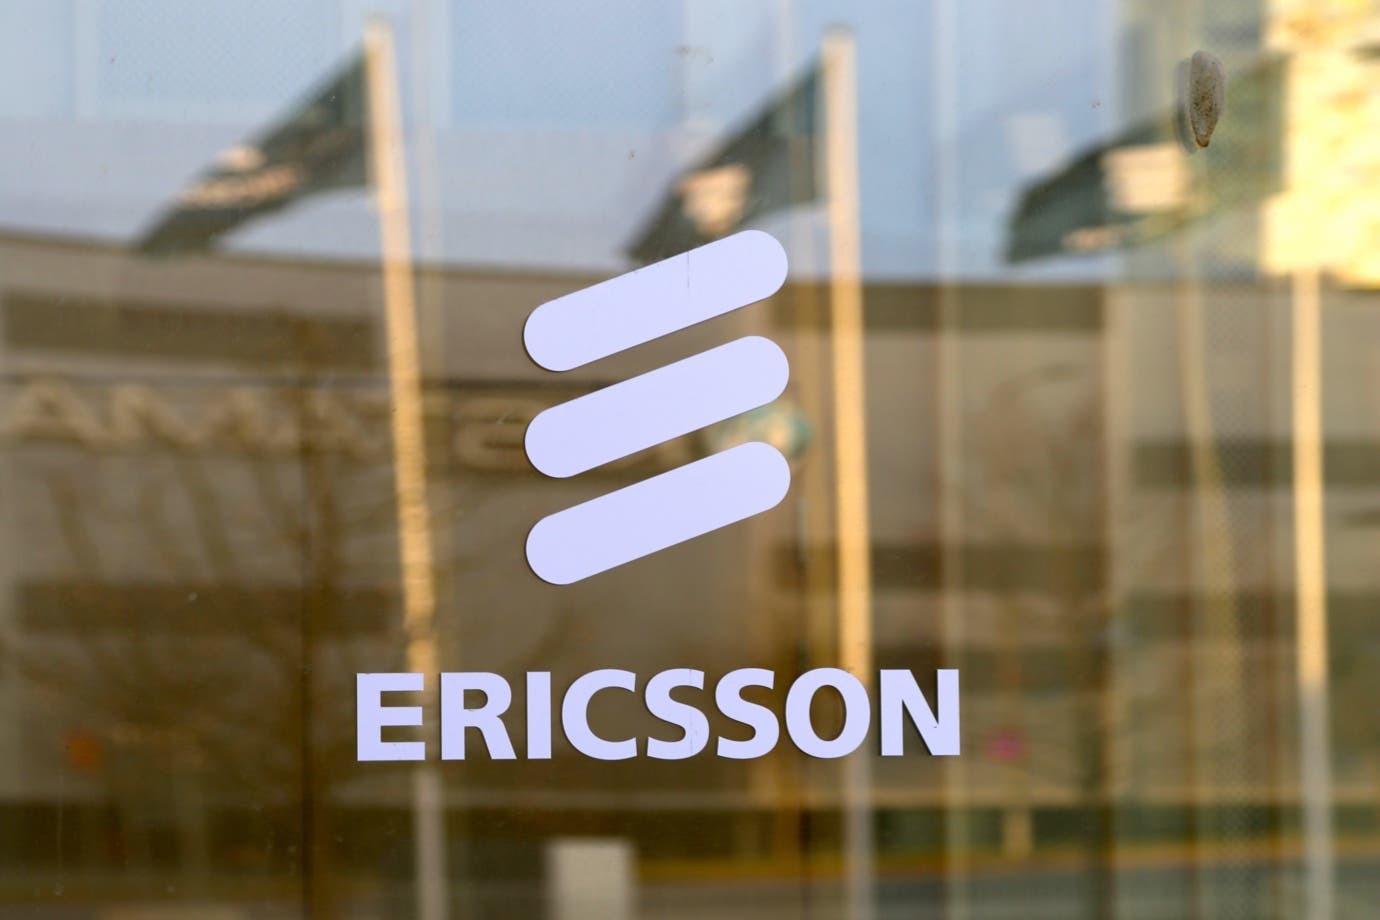 Ericsson prevé 2.600 millones de suscriptores a 5G dentro de 6 años